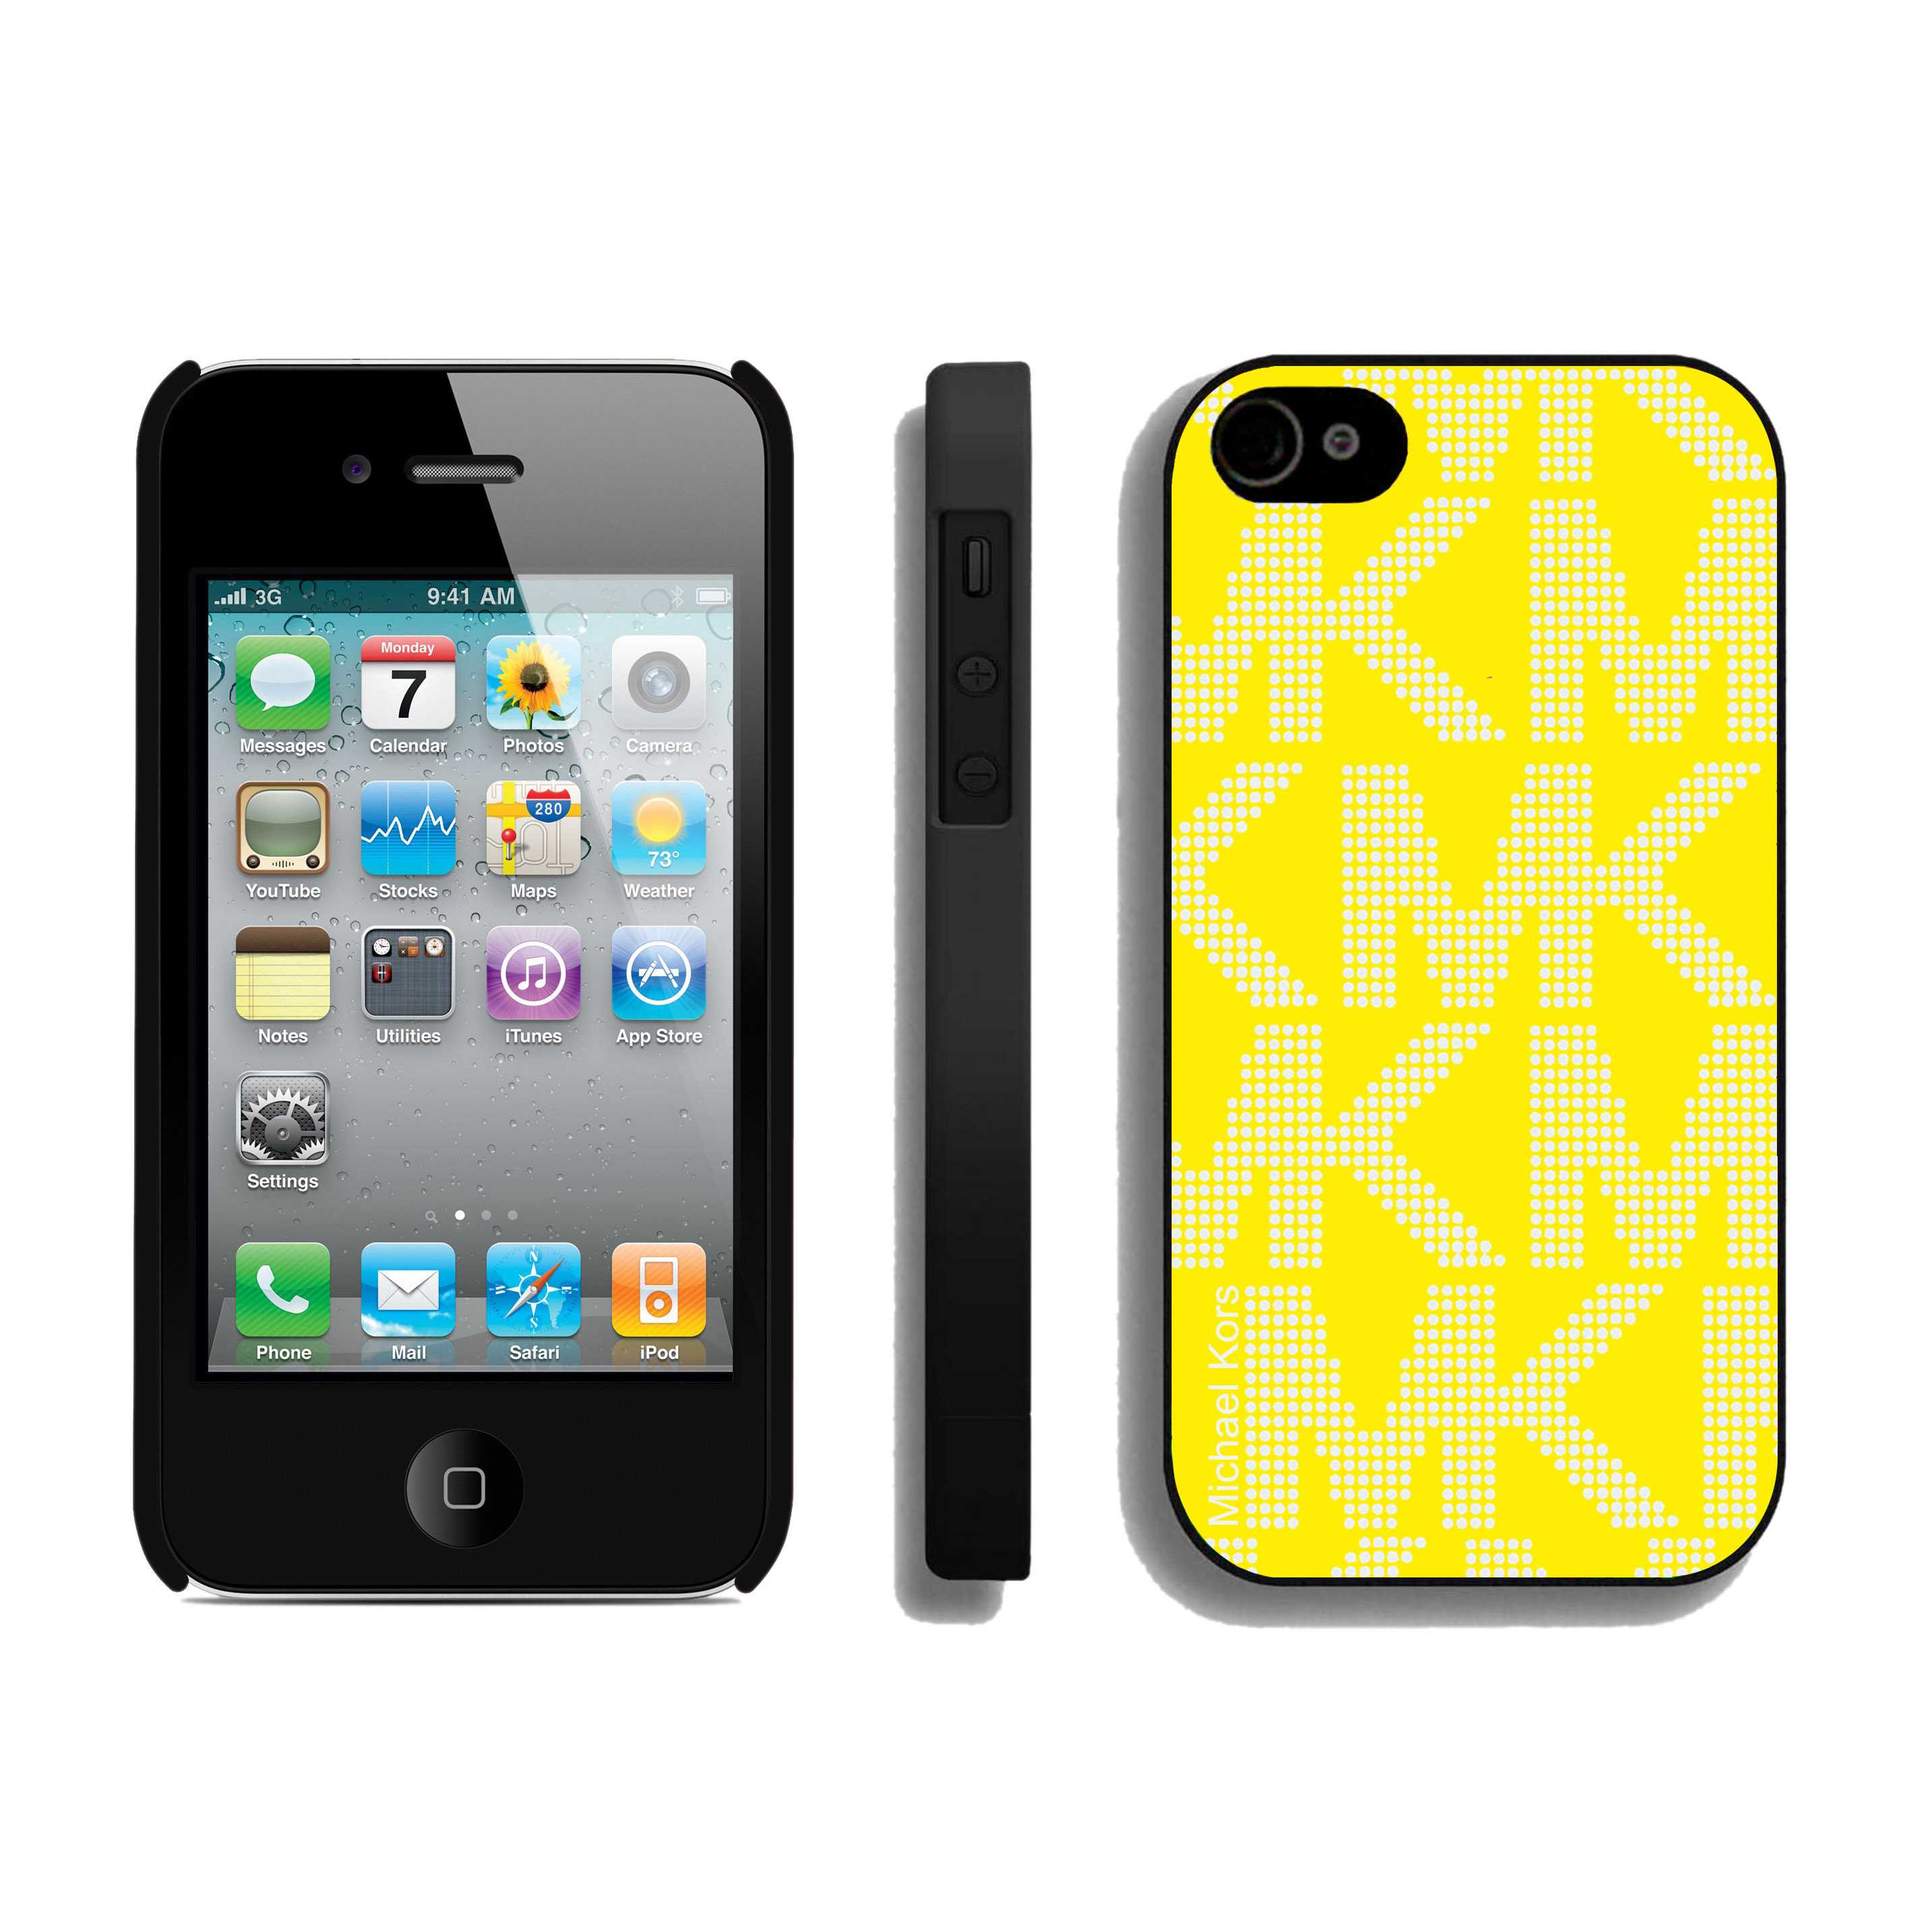 Michael Kors Big Logo Signature Yellow iPhone 4 Cases